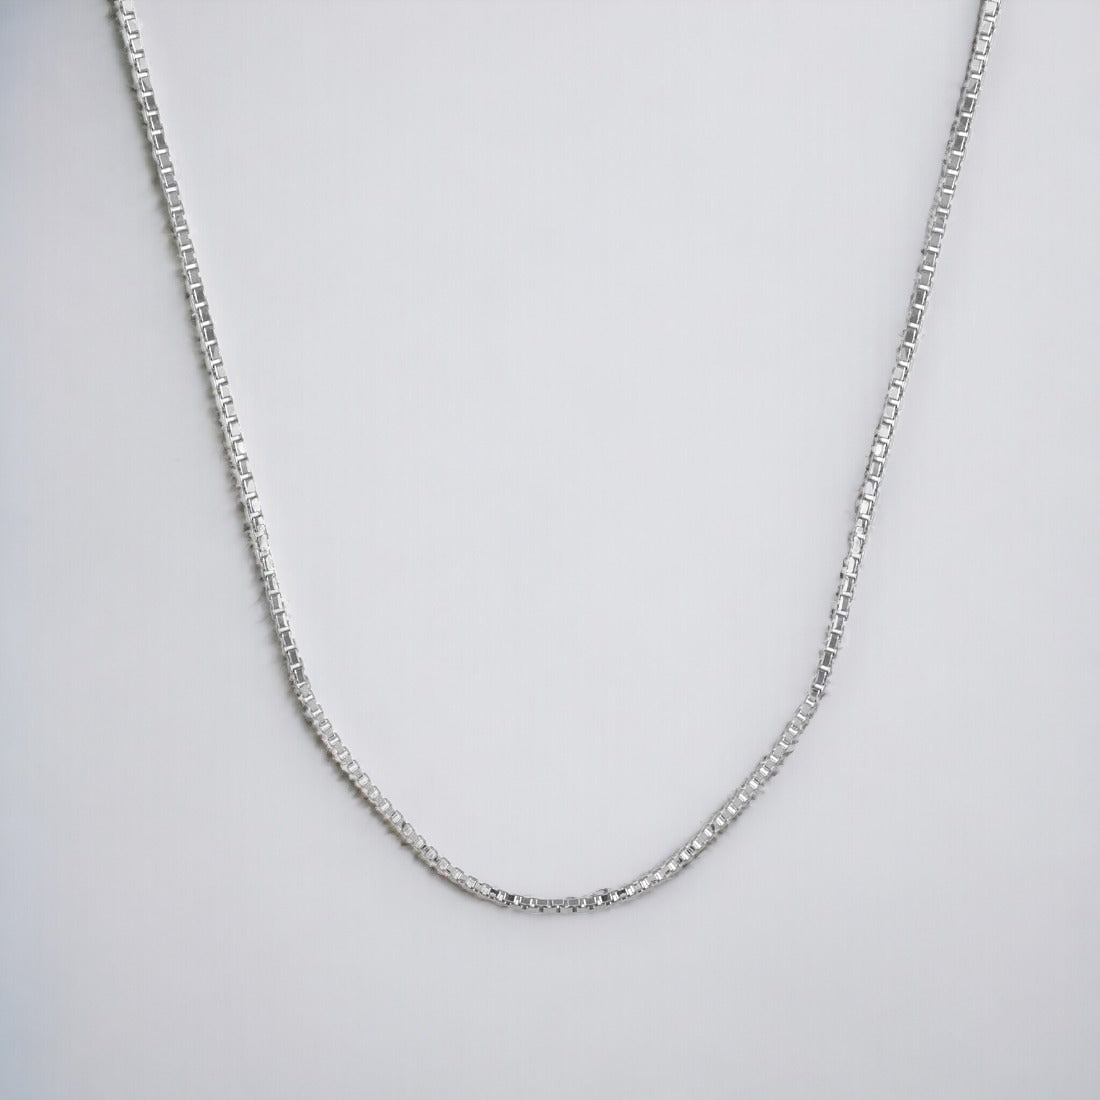 Sleek Sterling Silver Chain for Women & Girls - 2.96 Grams